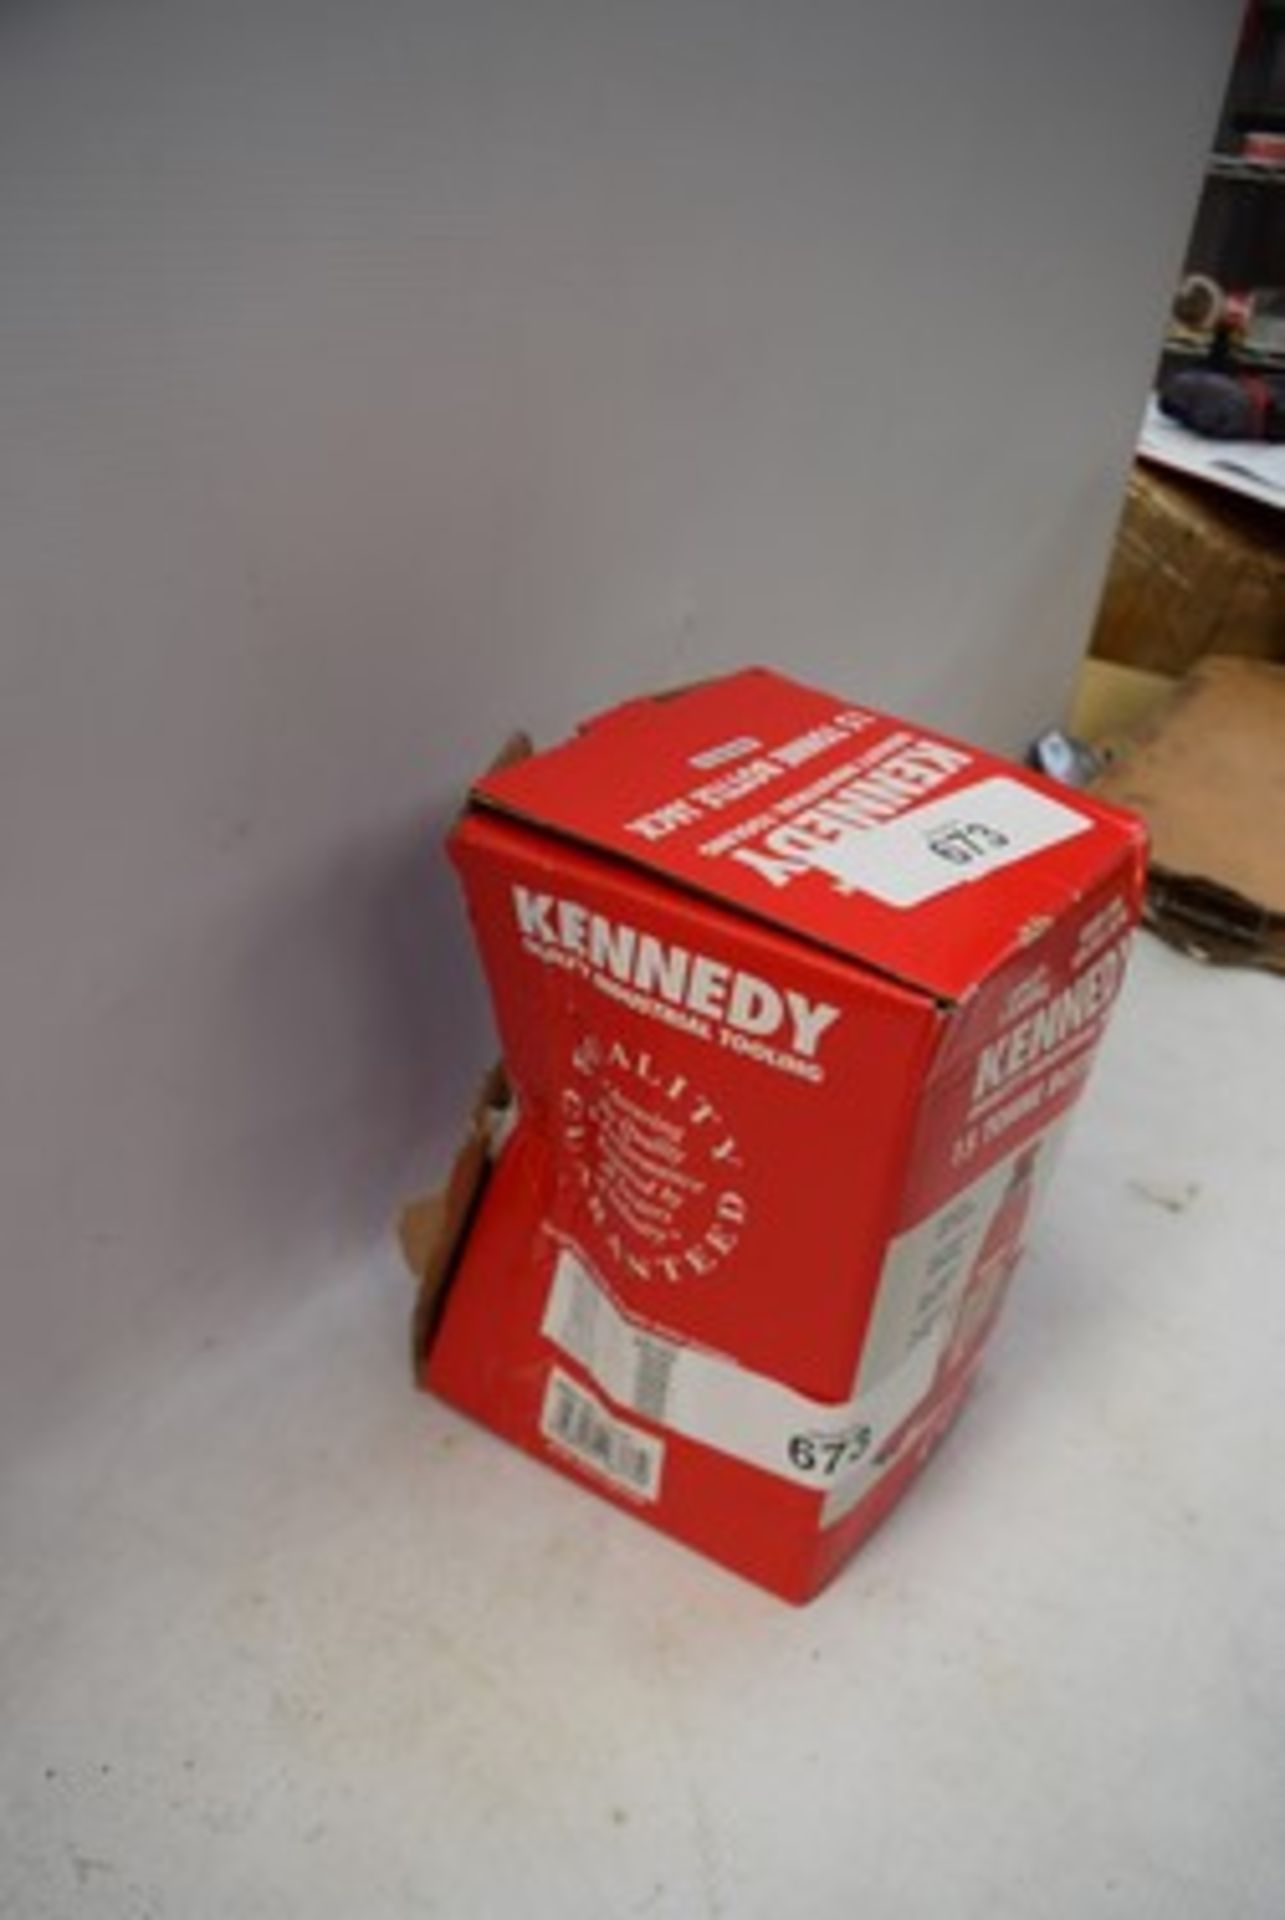 1 x Kennedy 15 tonne bottle jack - new in tatty box (GS0) - Image 2 of 3